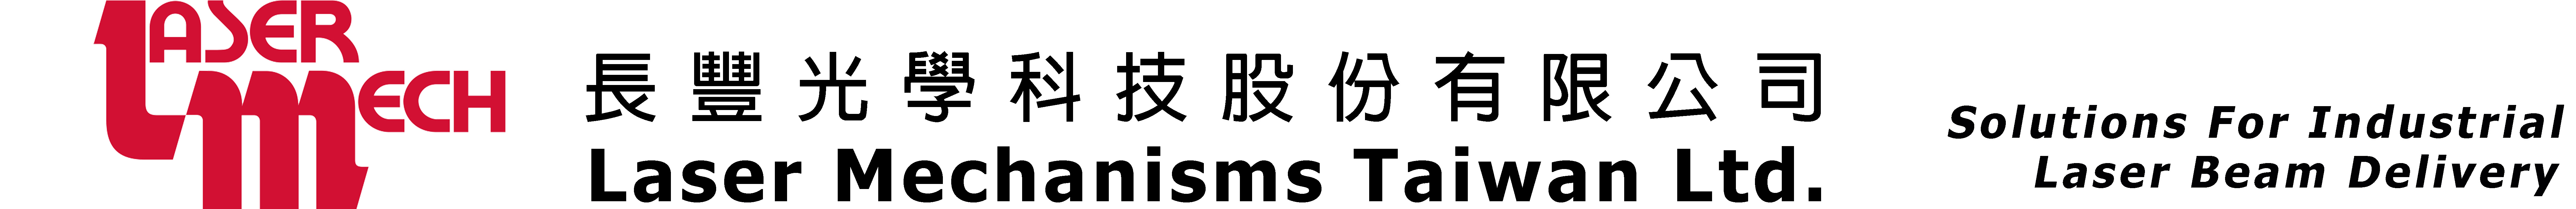 Laser Mechanisms Taiwan Ltd. 長豐光學科技股份有限公司